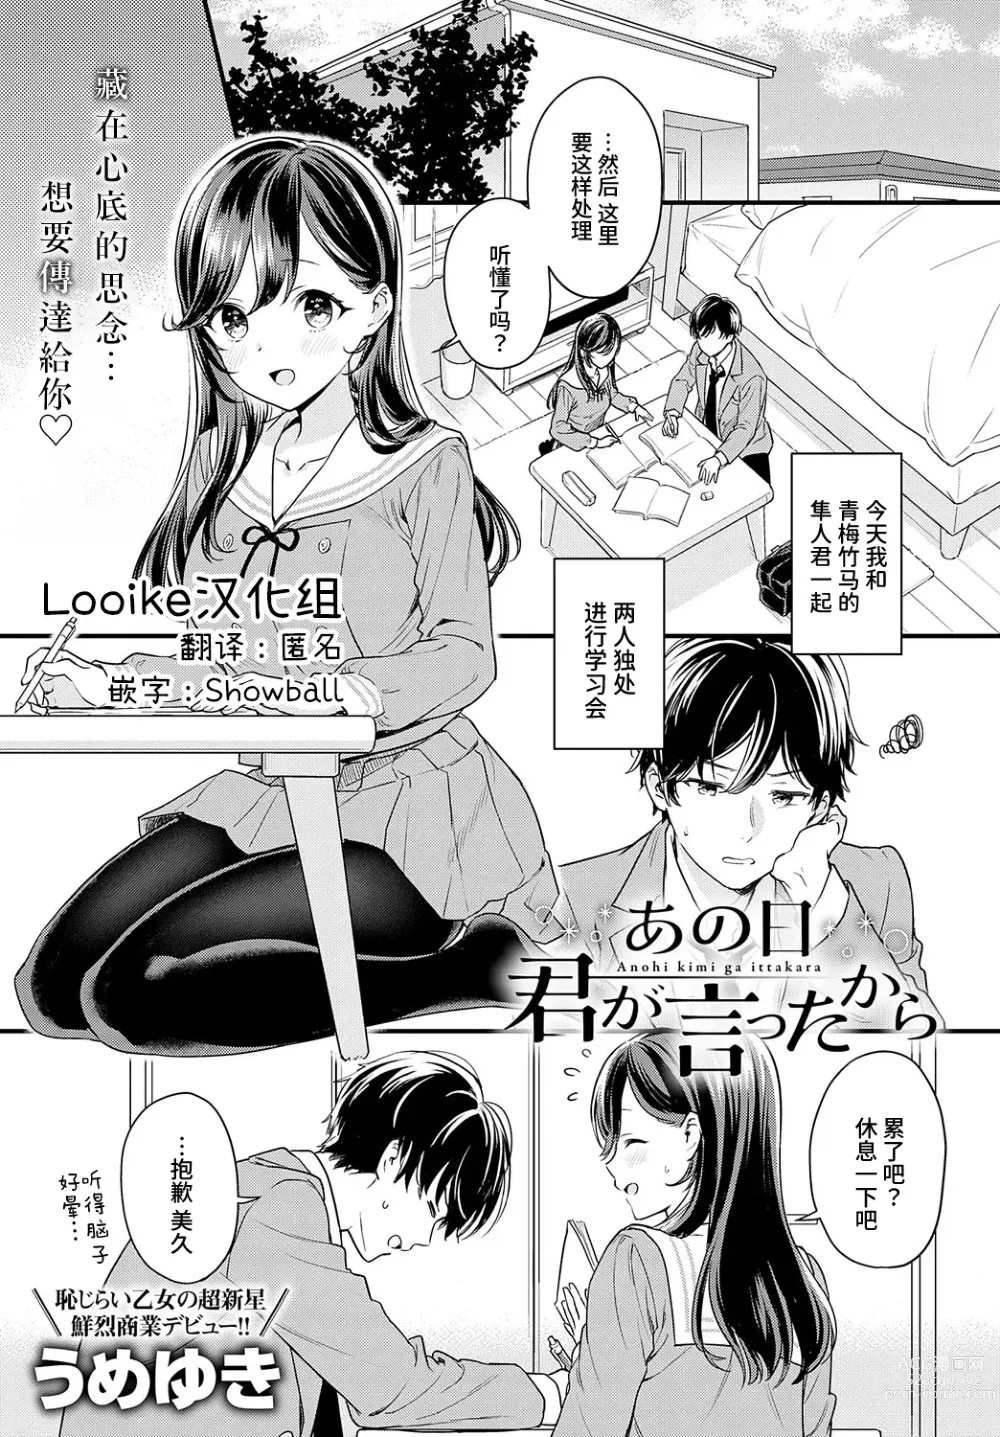 Page 1 of manga Anohi kimi ga ittakara